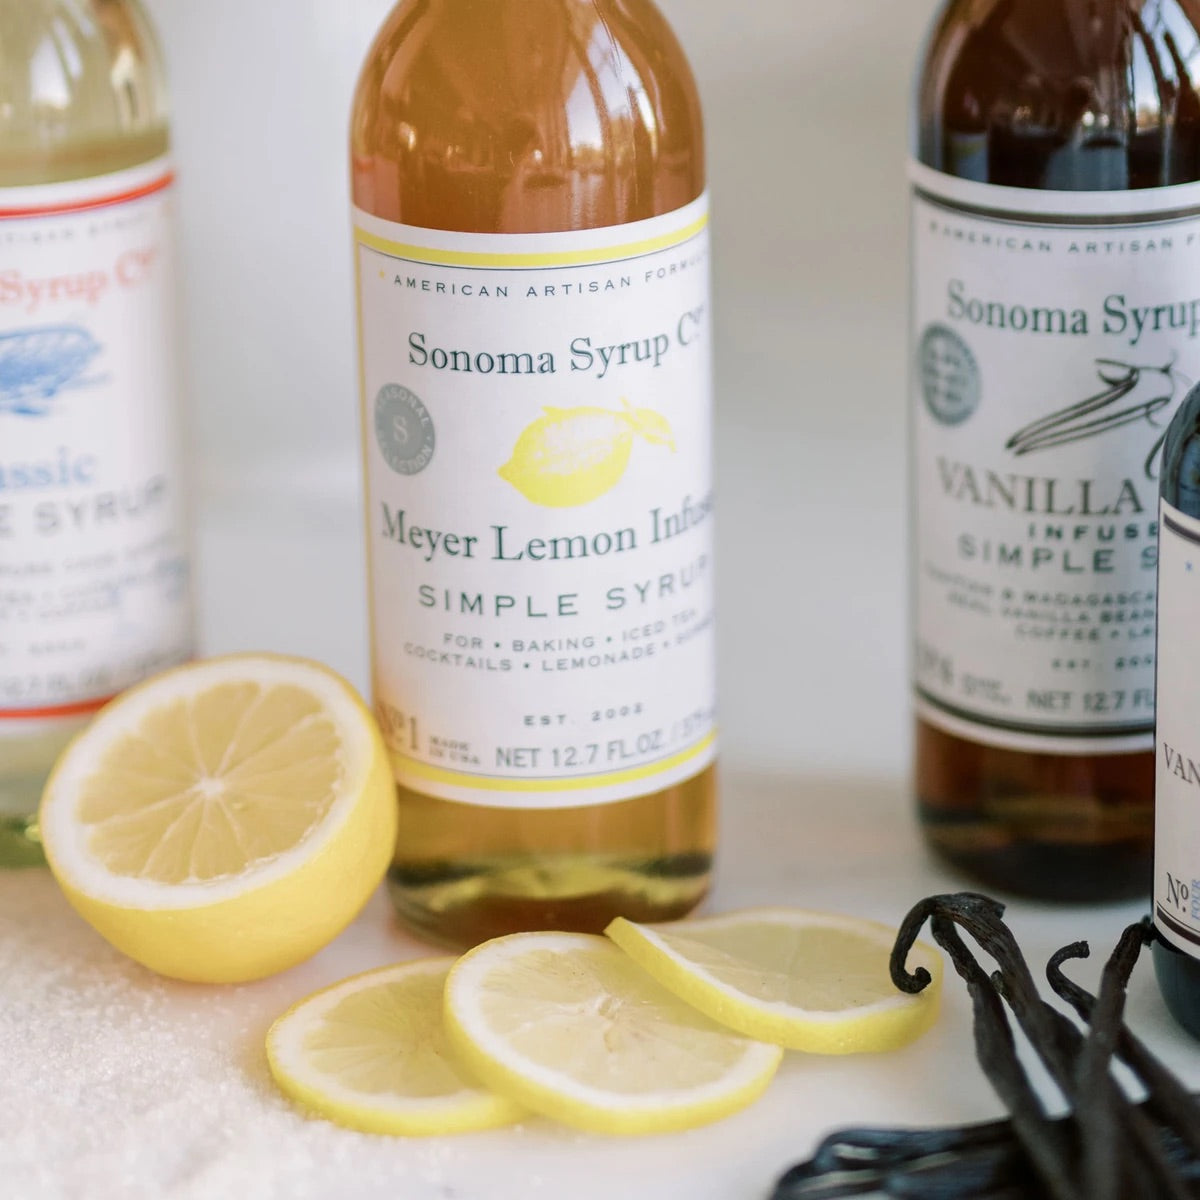 Meyer Lemon Infused Simple Syrup